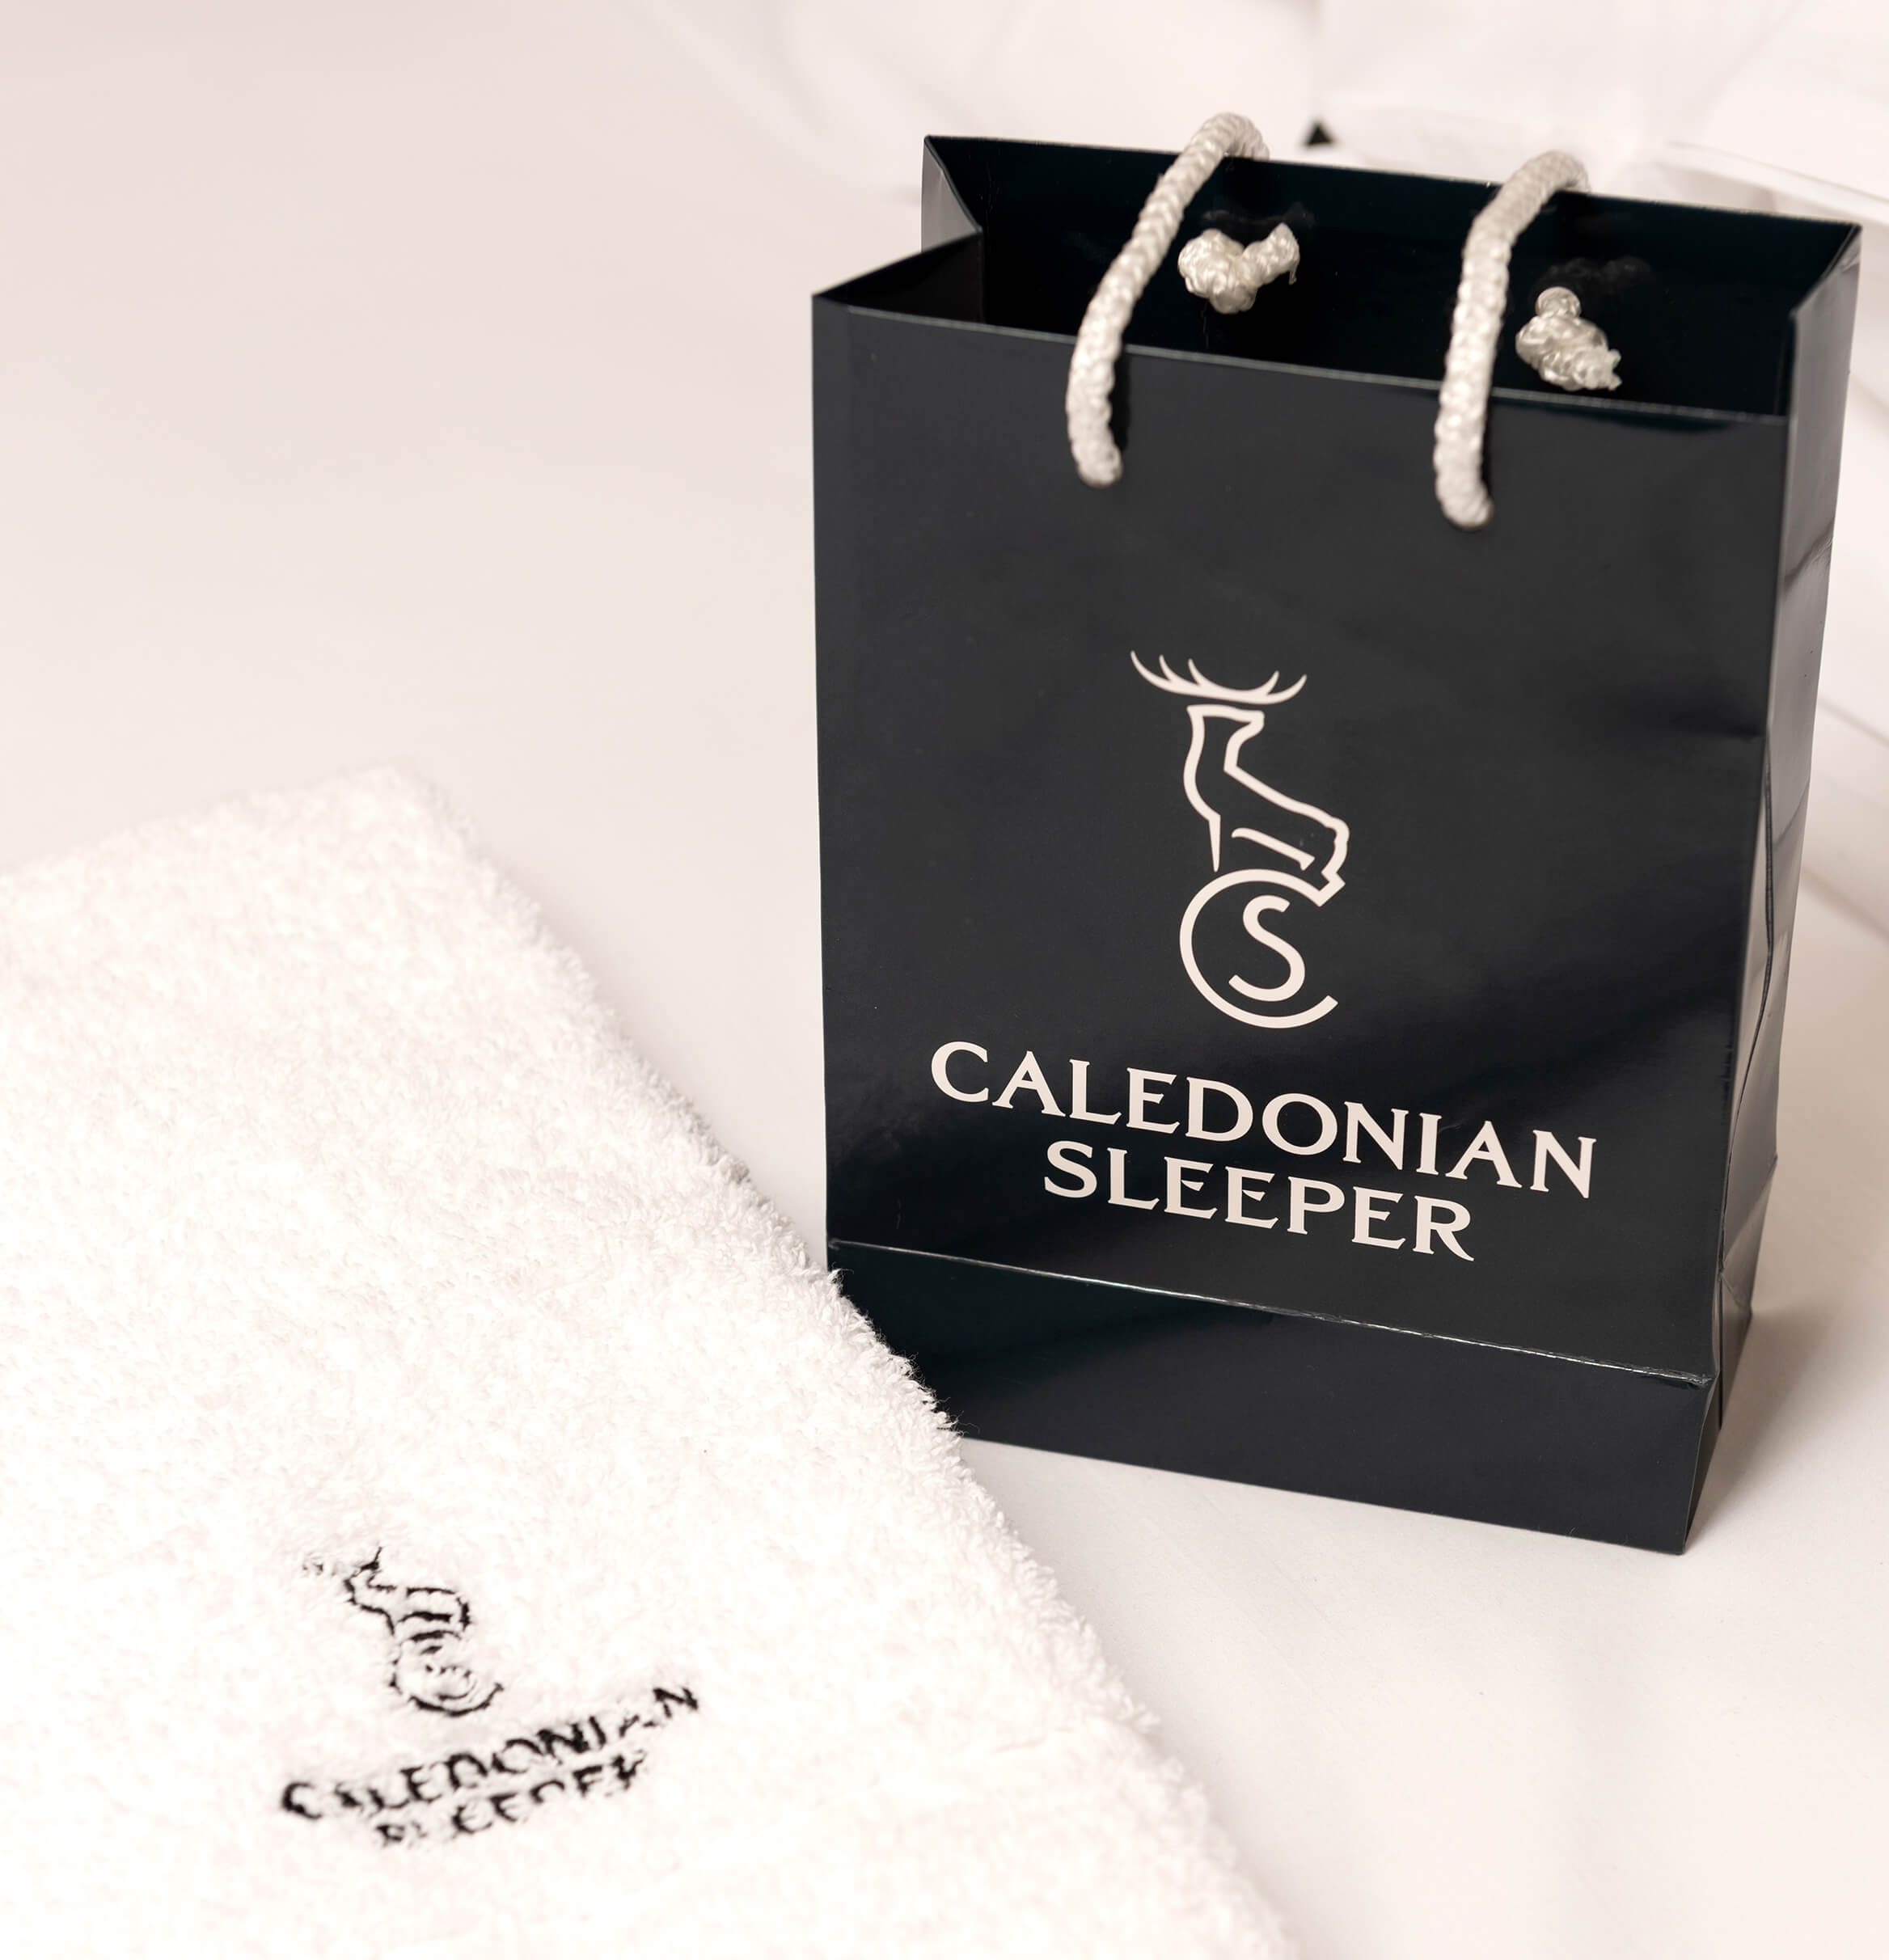 Caledonian Double supplements | luxury train travel with Caledonian Sleeper